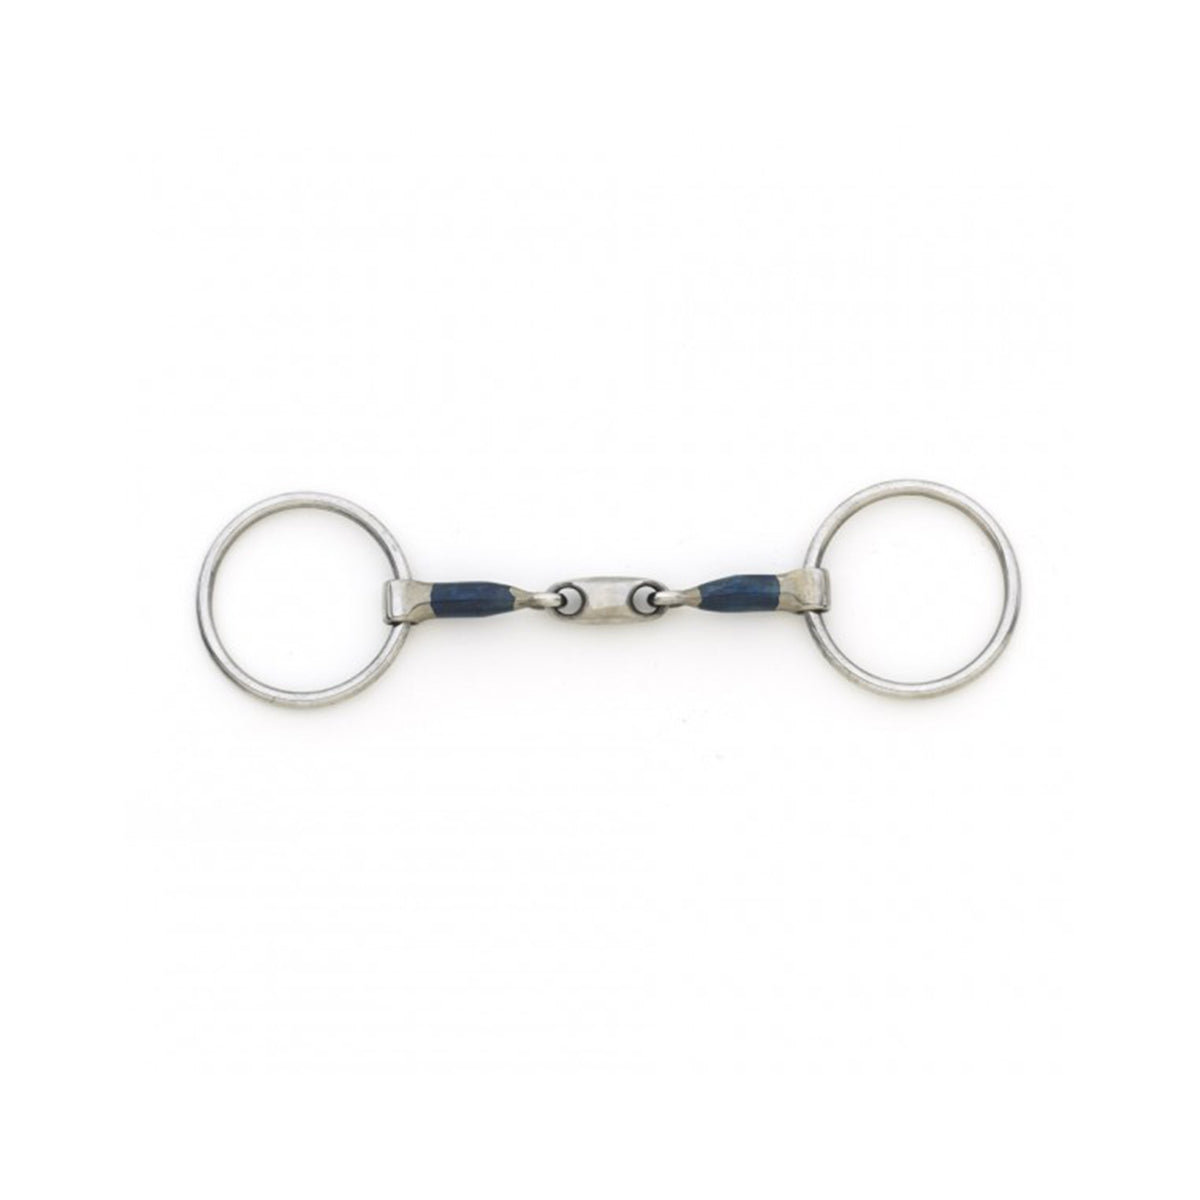 Centaur Blue Steel Oval Peanut Mouth Loose Ring Bit